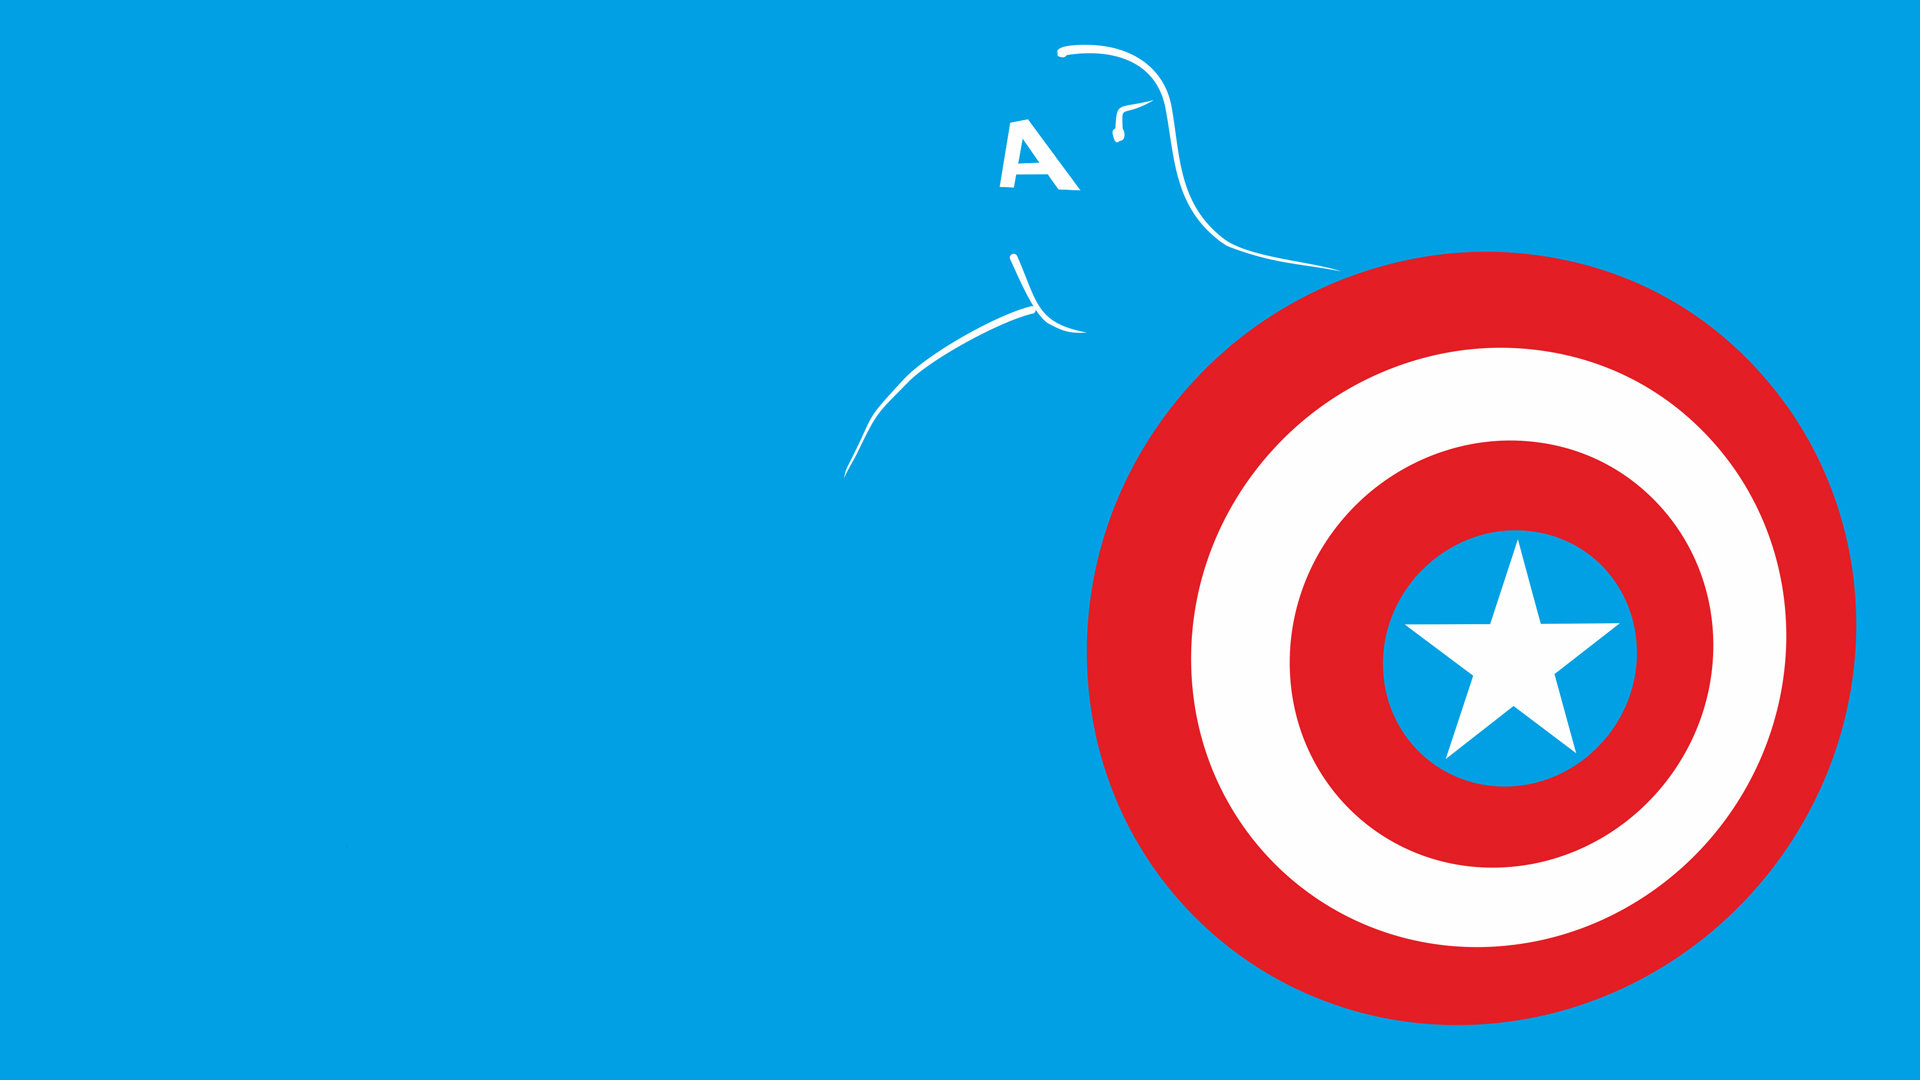 Free download Captain America (Marvel comics) wallpaper ID:292772 1080p for computer